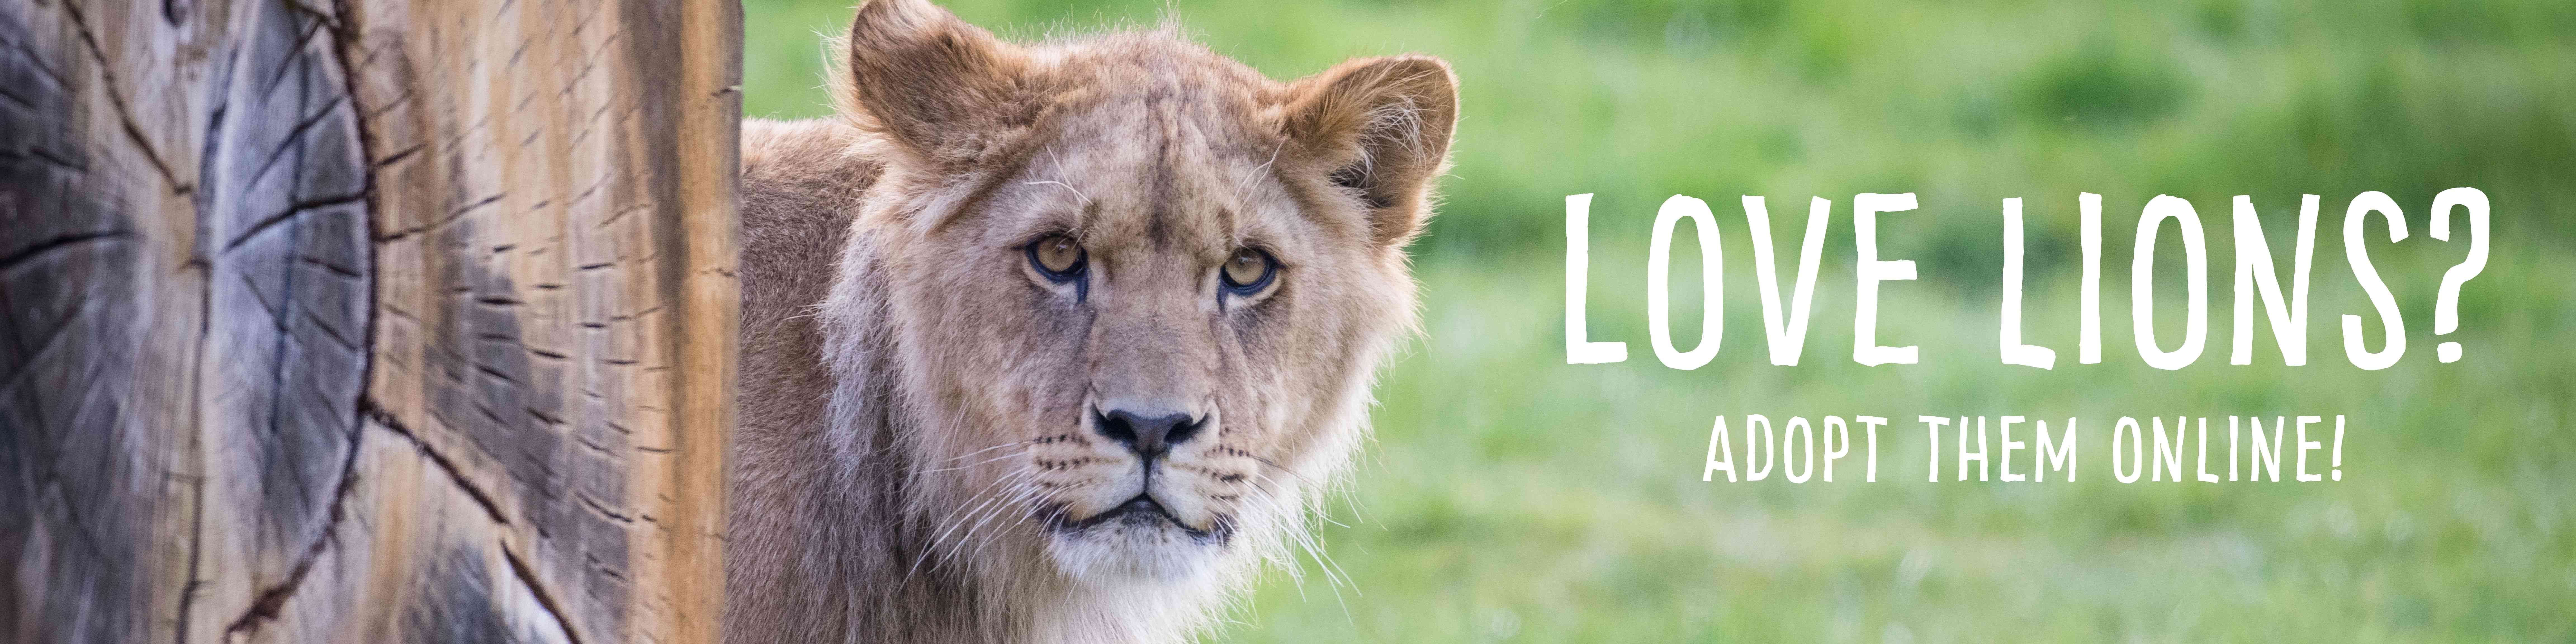 Lion Adoption Banner - Woburn Safari Park.jpg